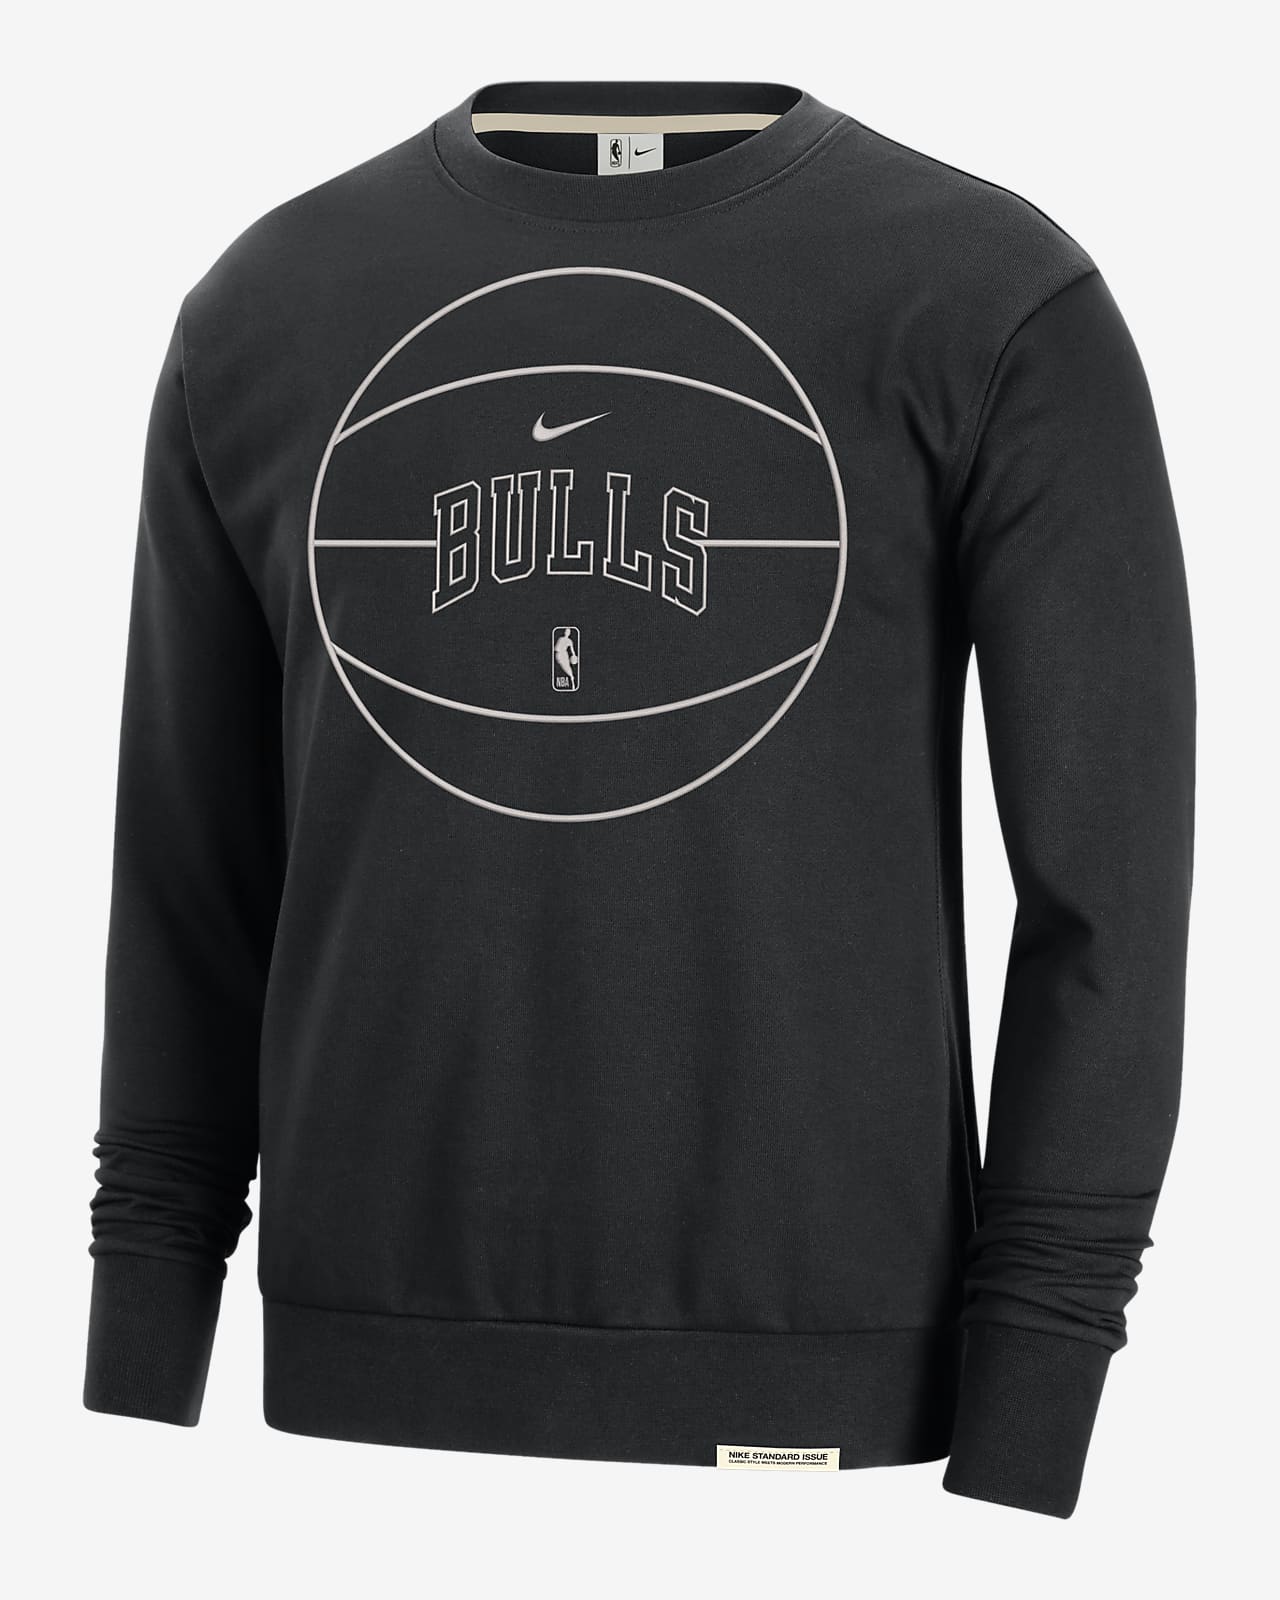 Nike Chicago Bulls NBA T-Shirt - Black